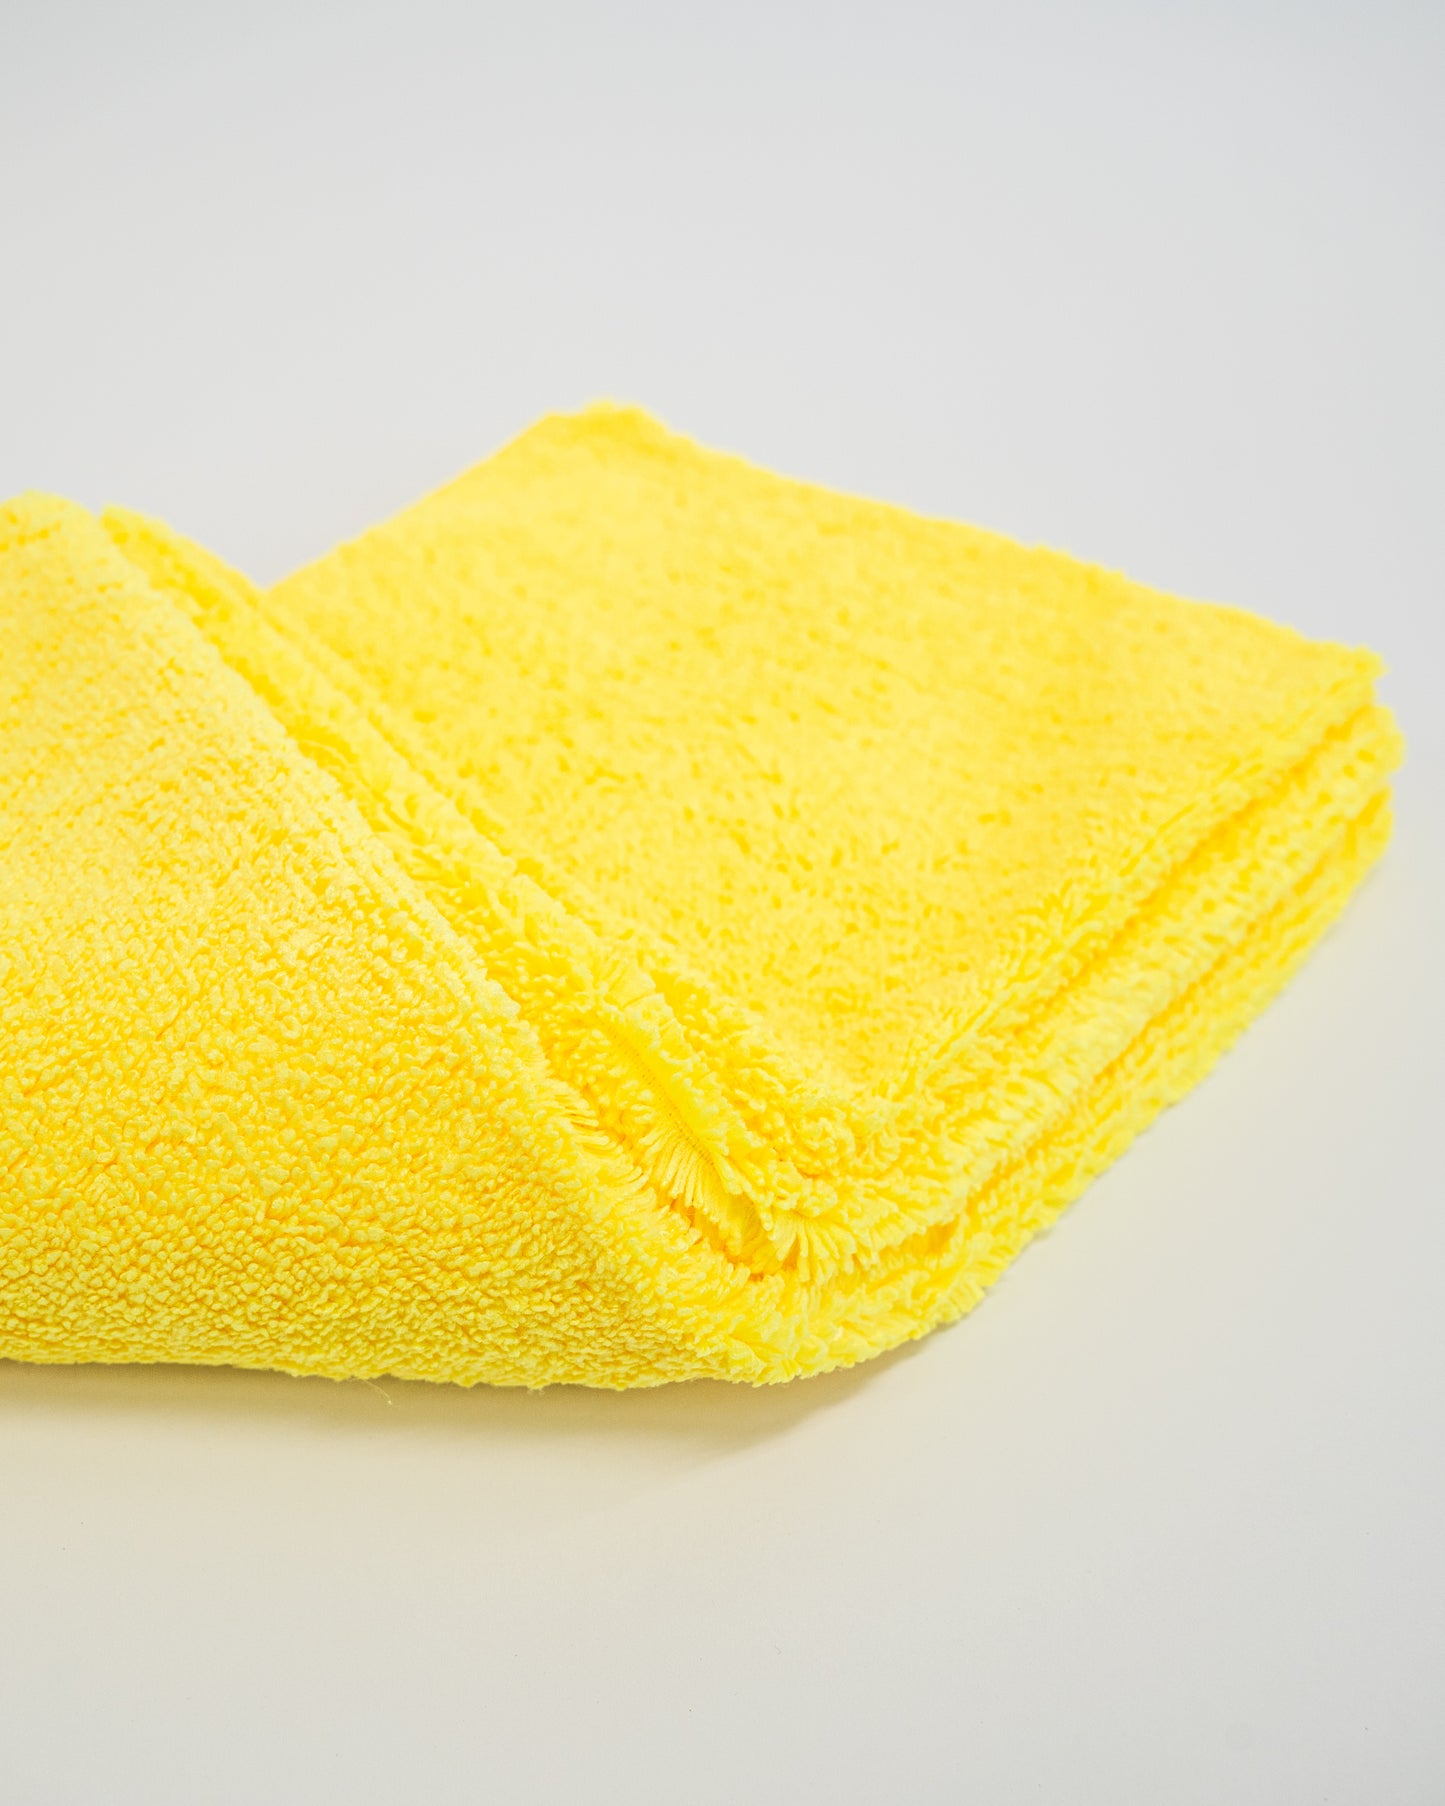 Duplex Edgeless Cloth 3 Pack - Yellow